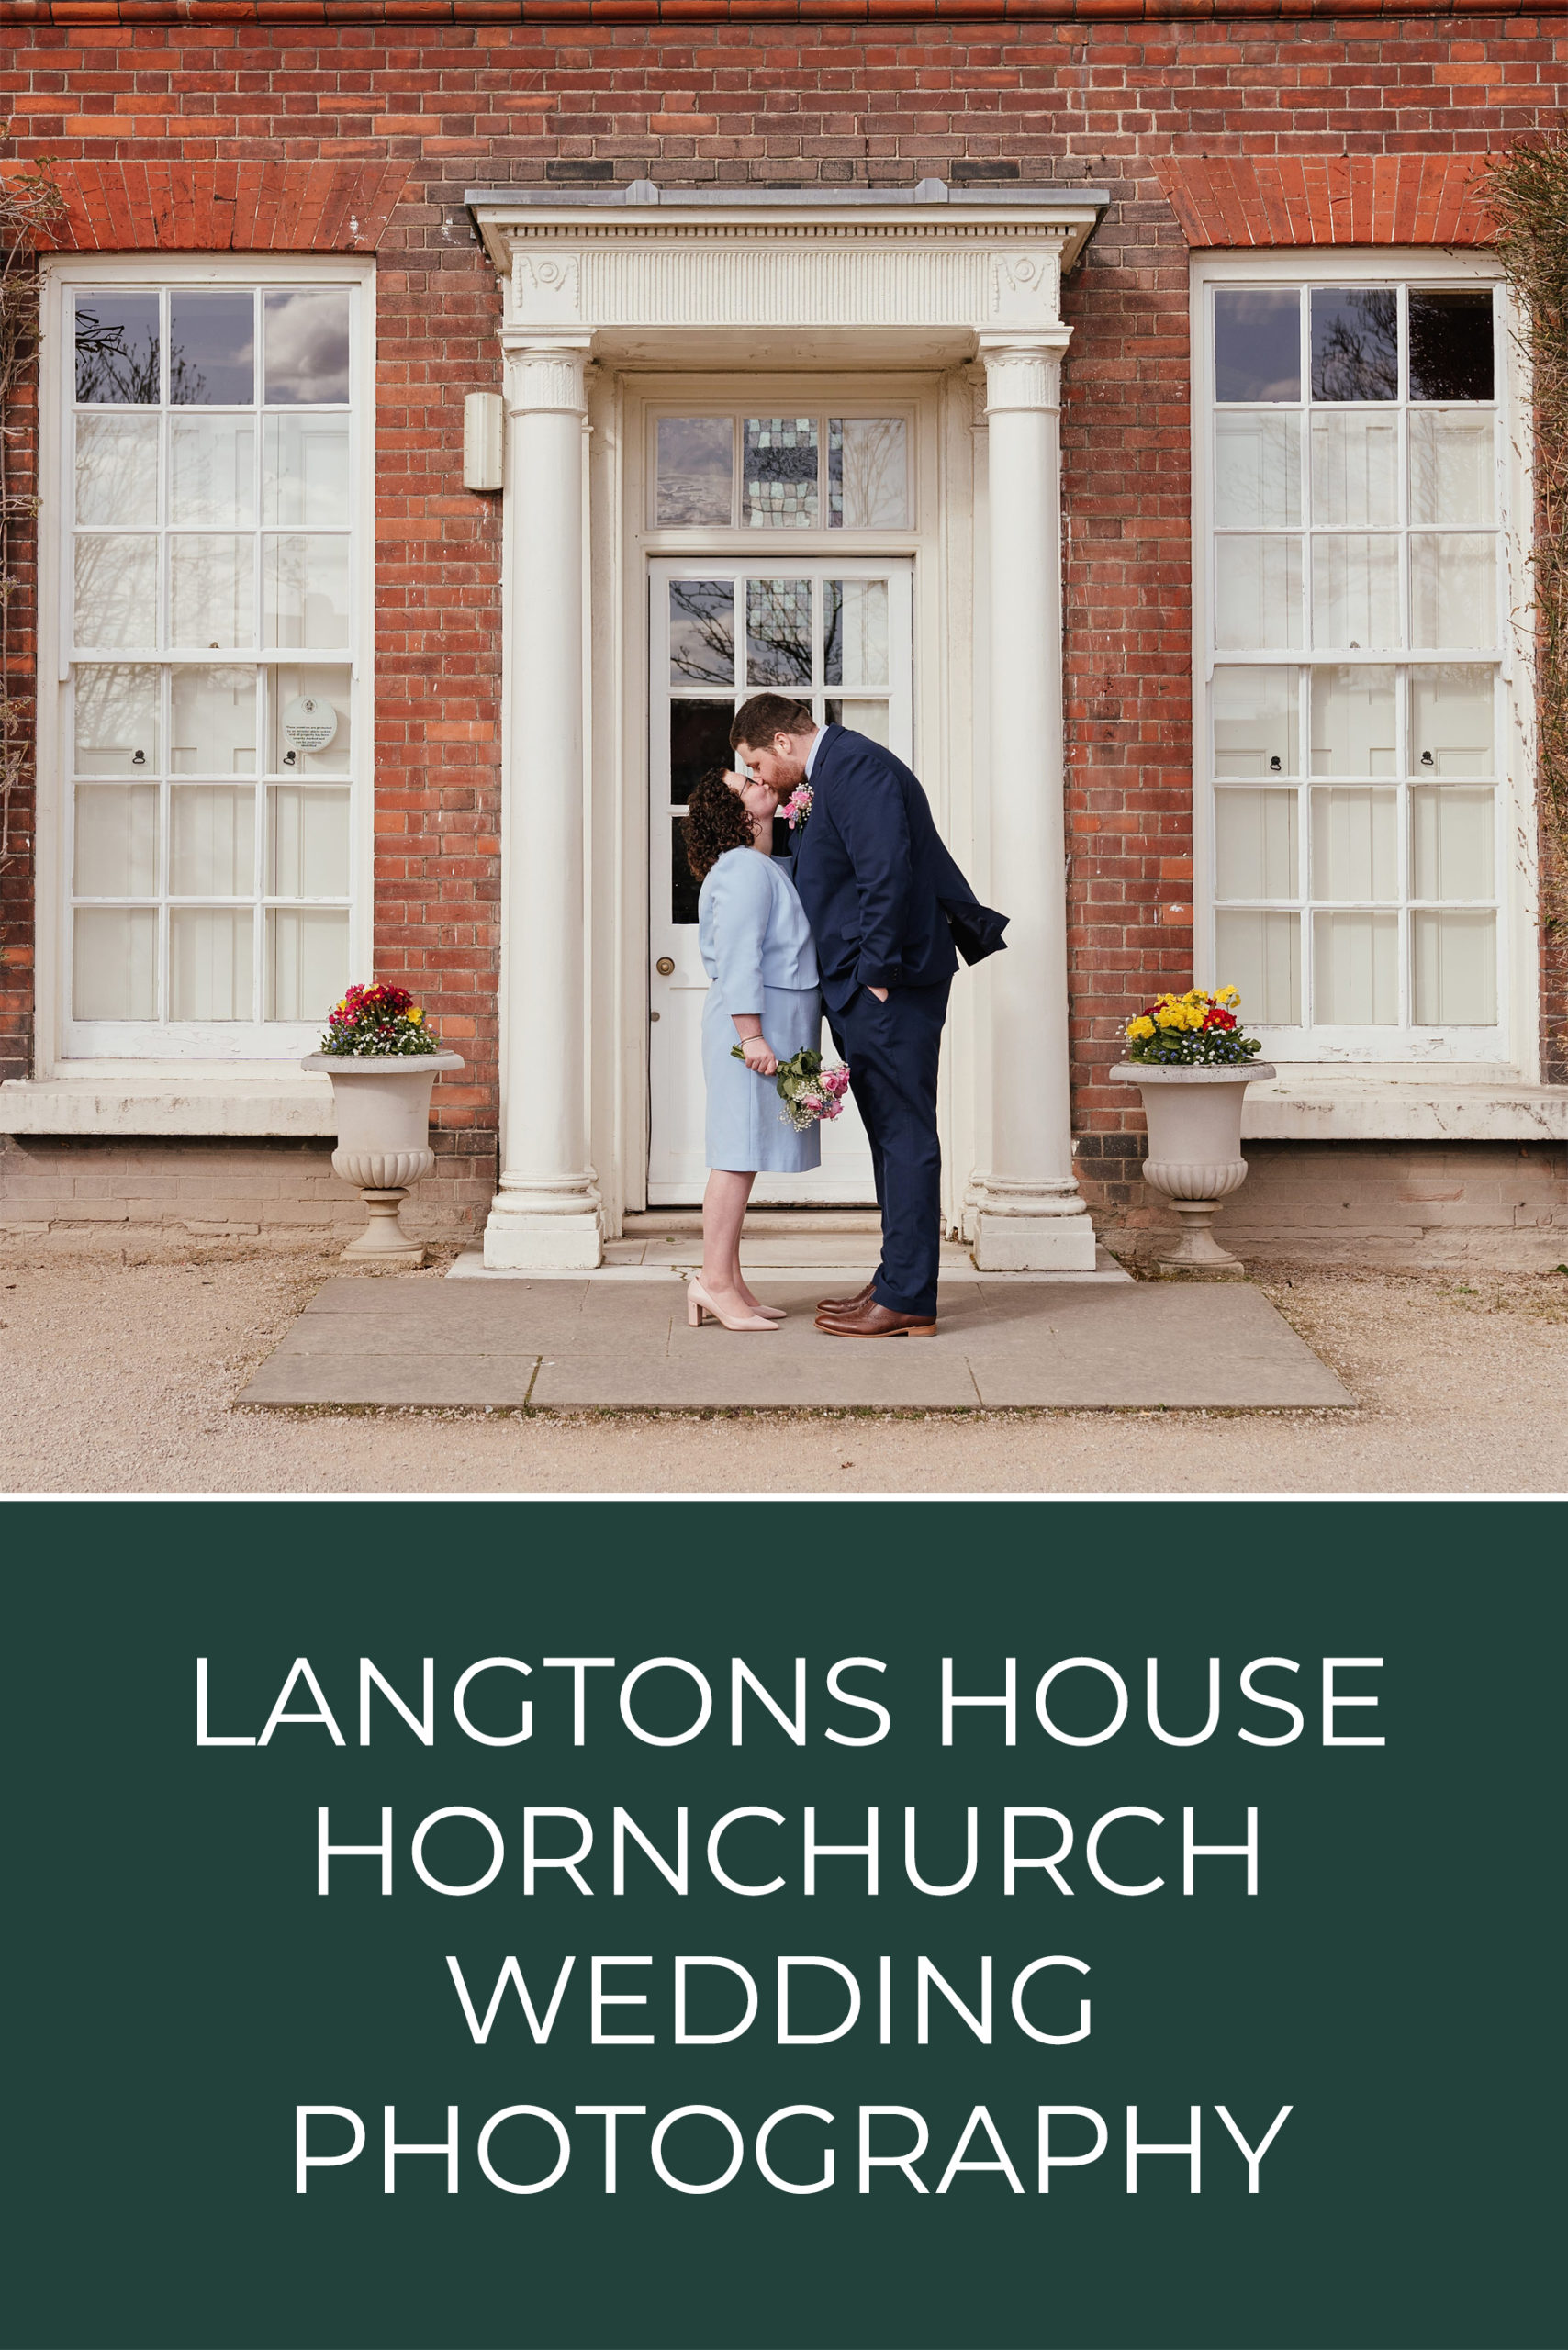 Langtons House Hornchurch Wedding Photographer Pinterest